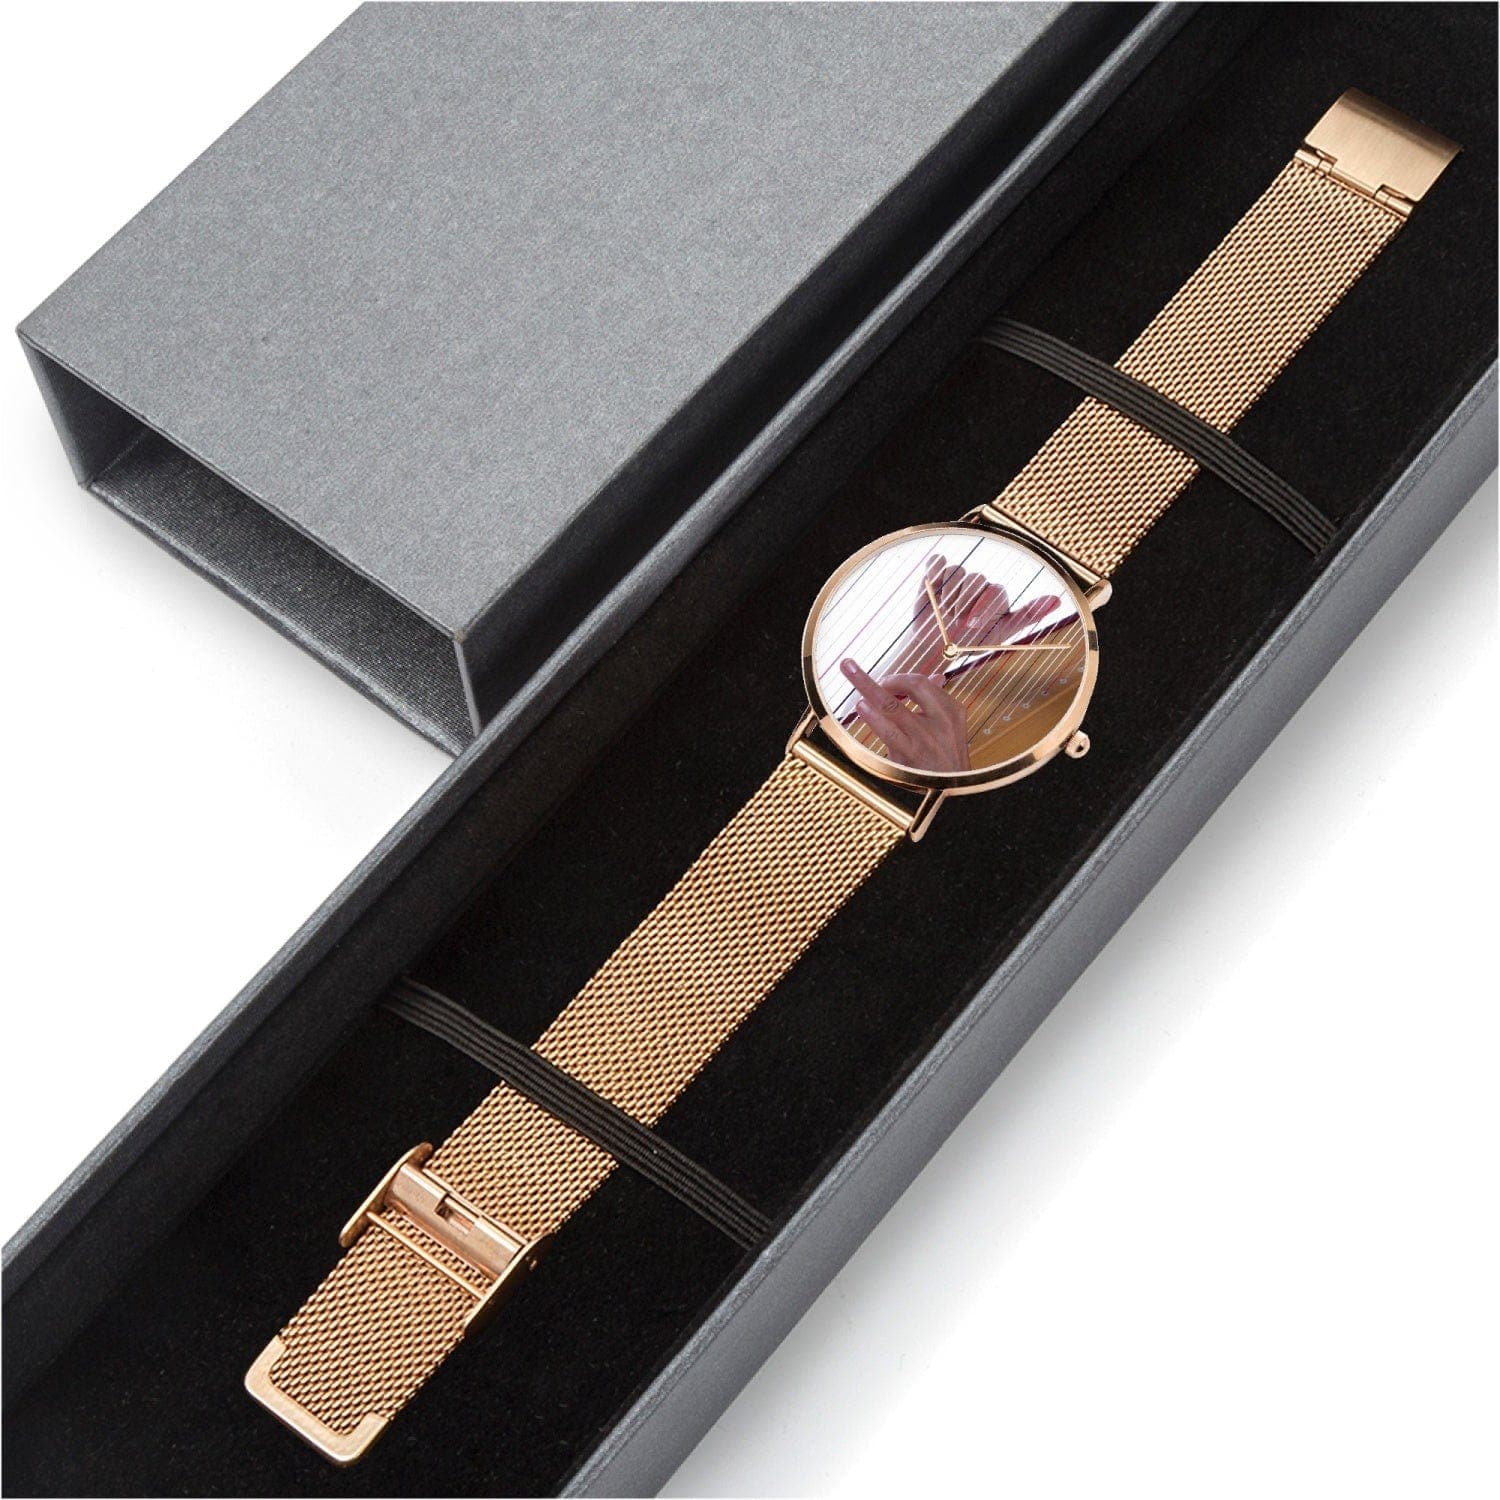 Harp fingers, Fashion Ultra-thin Stainless Steel Quartz Watch. Designer watch by Sensus Studio